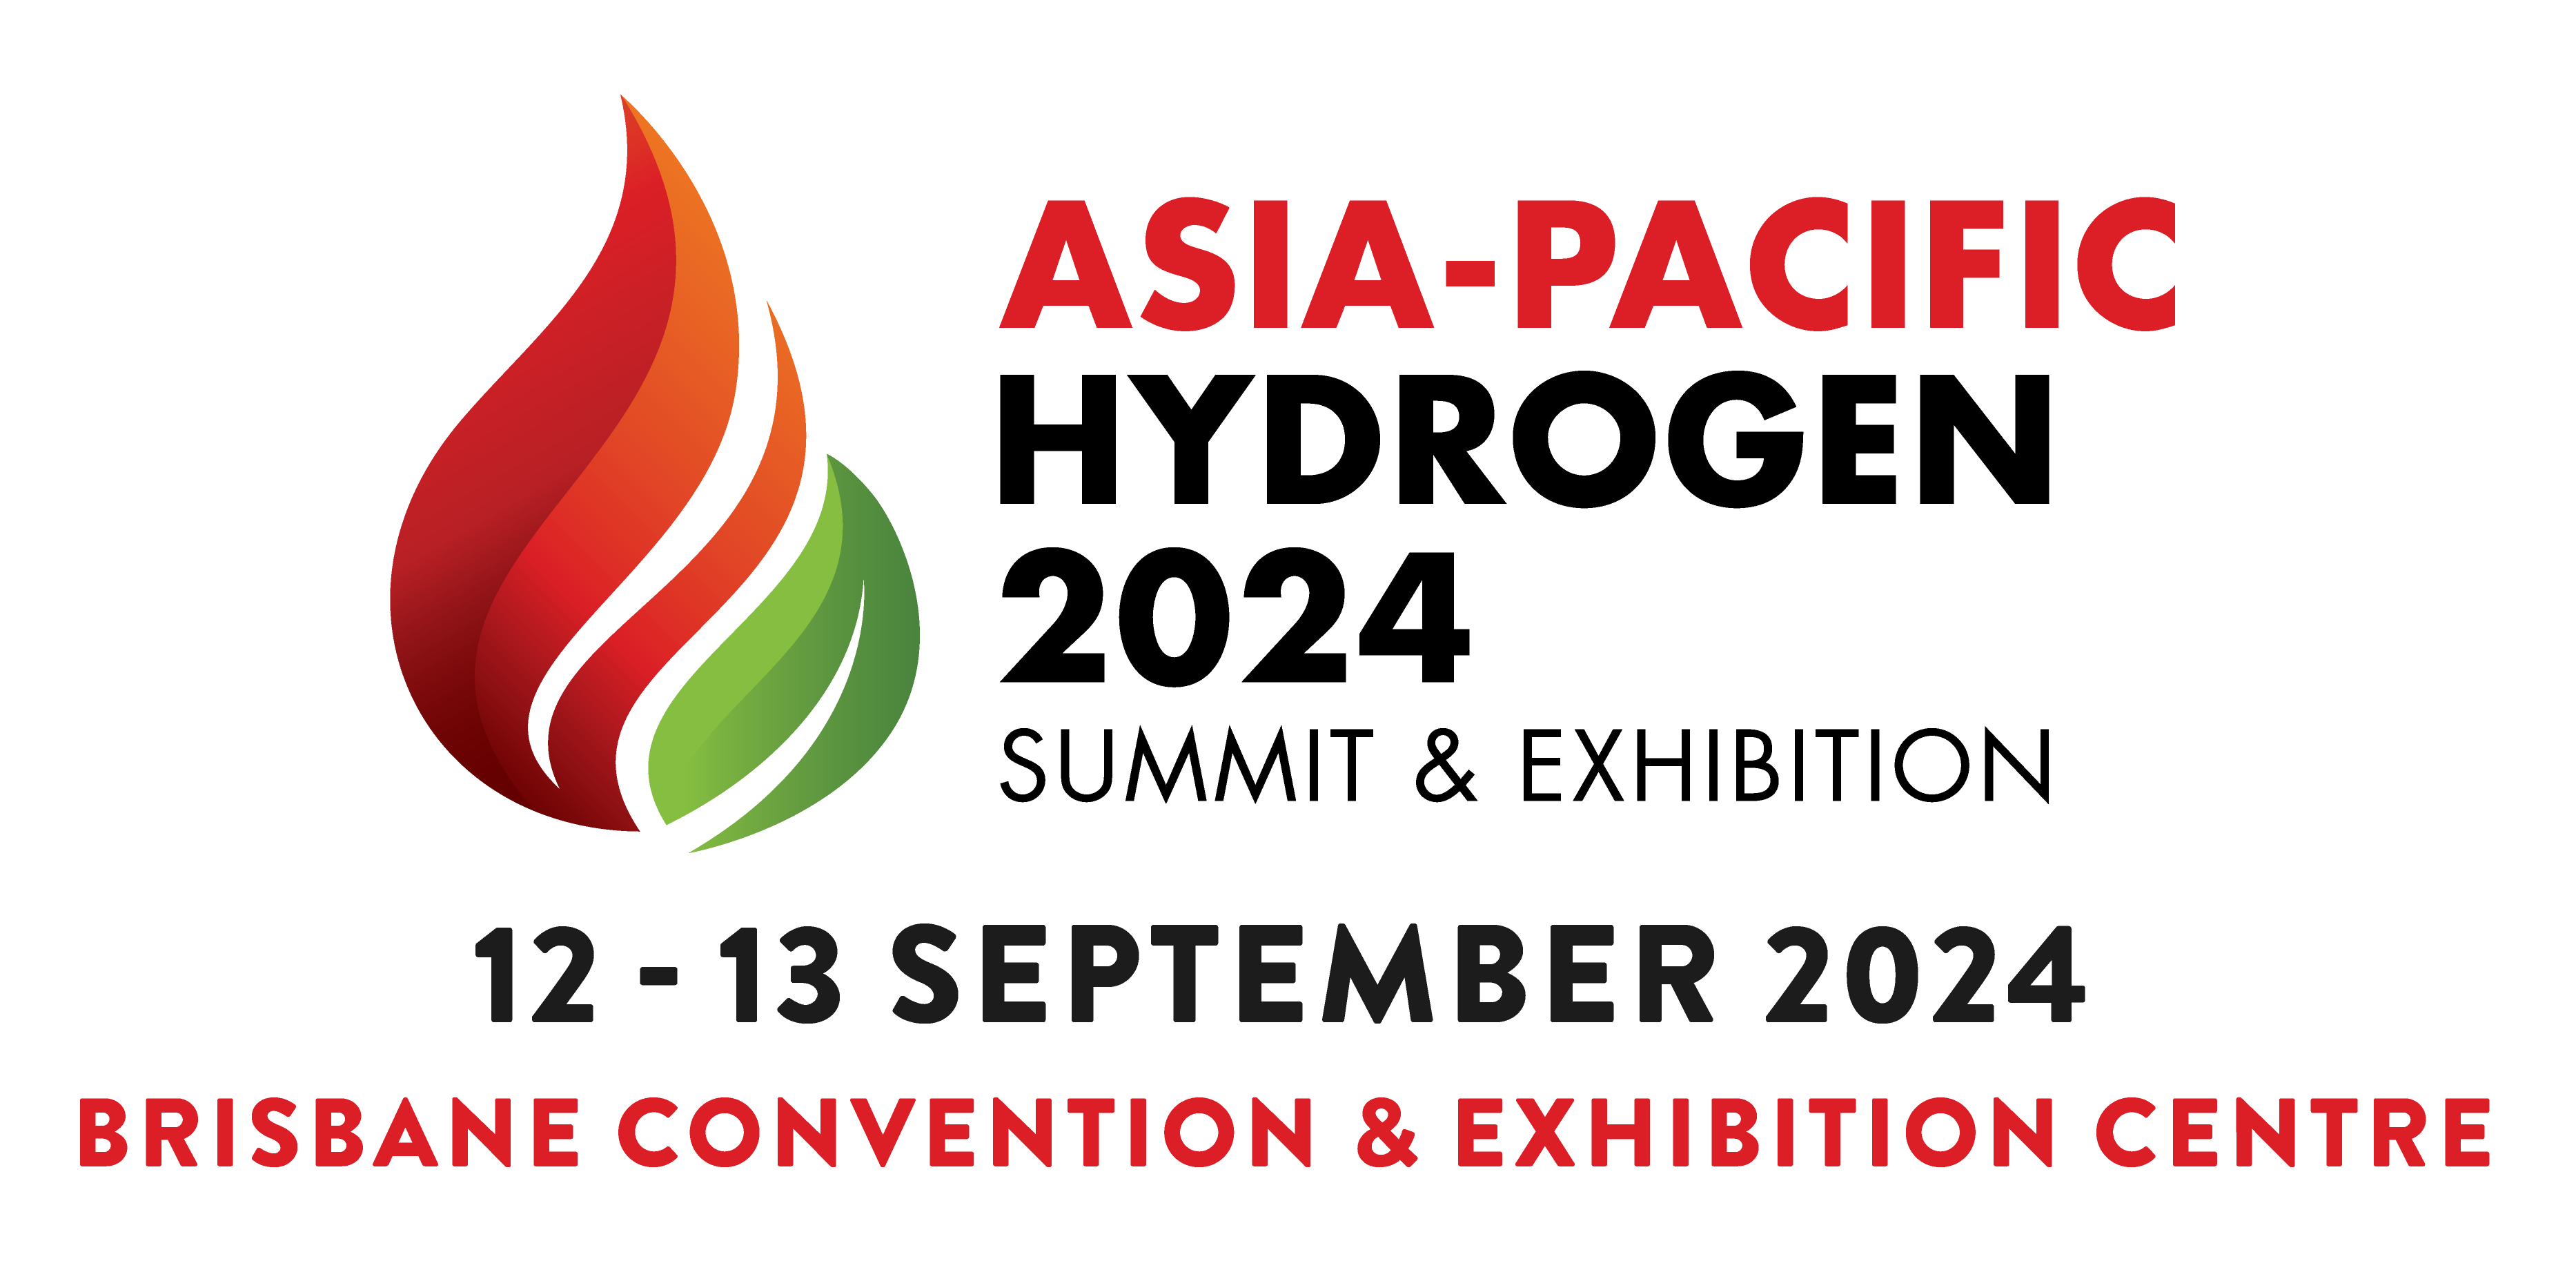 Asia Pacific Hydrogen 2024 Summit & Exhibition